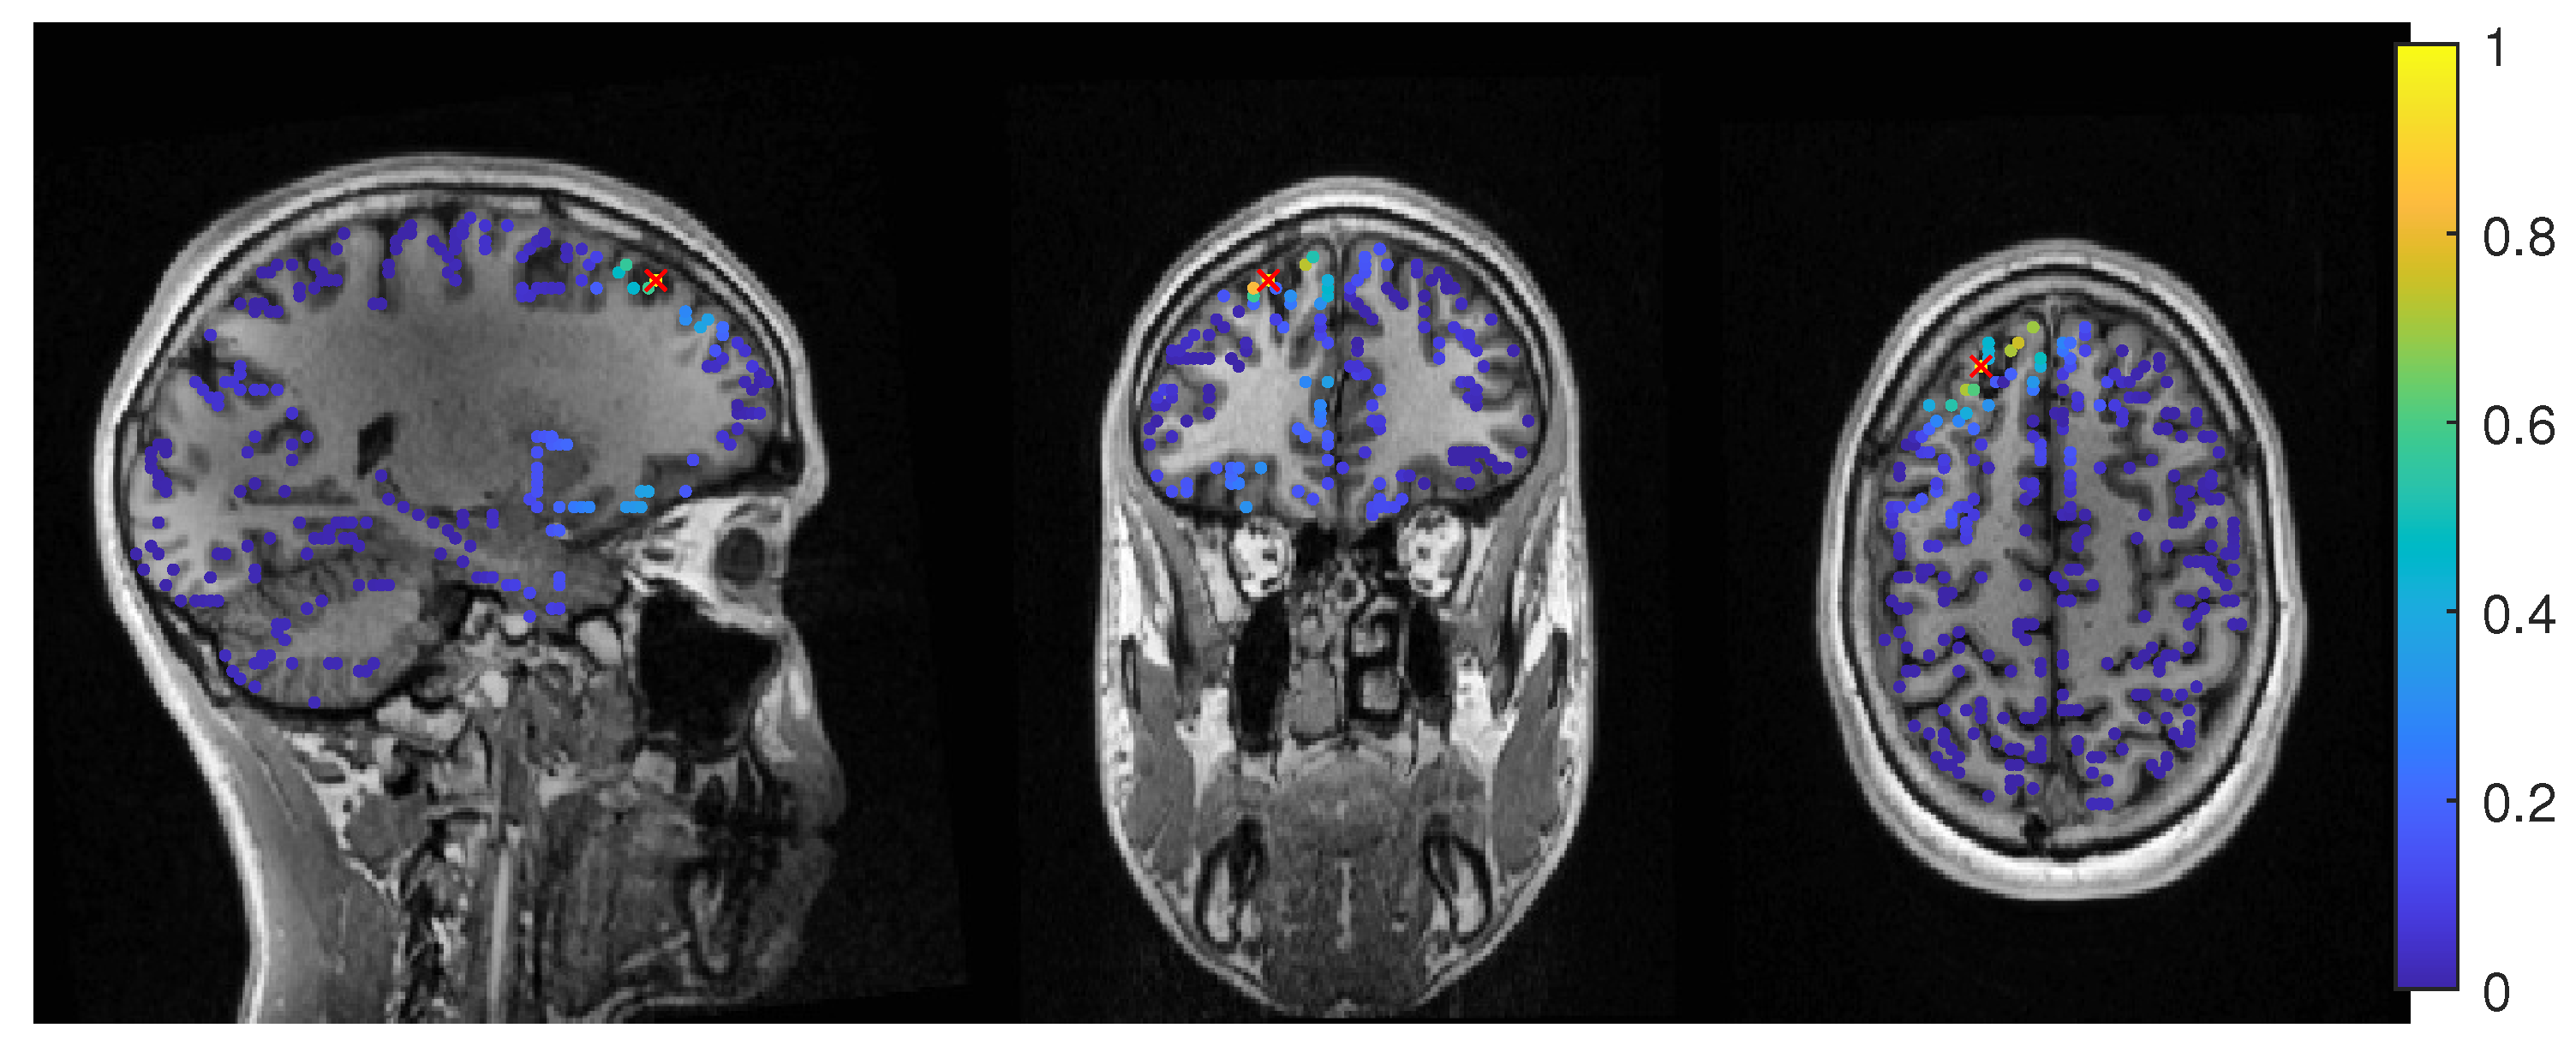 eeg brain scan